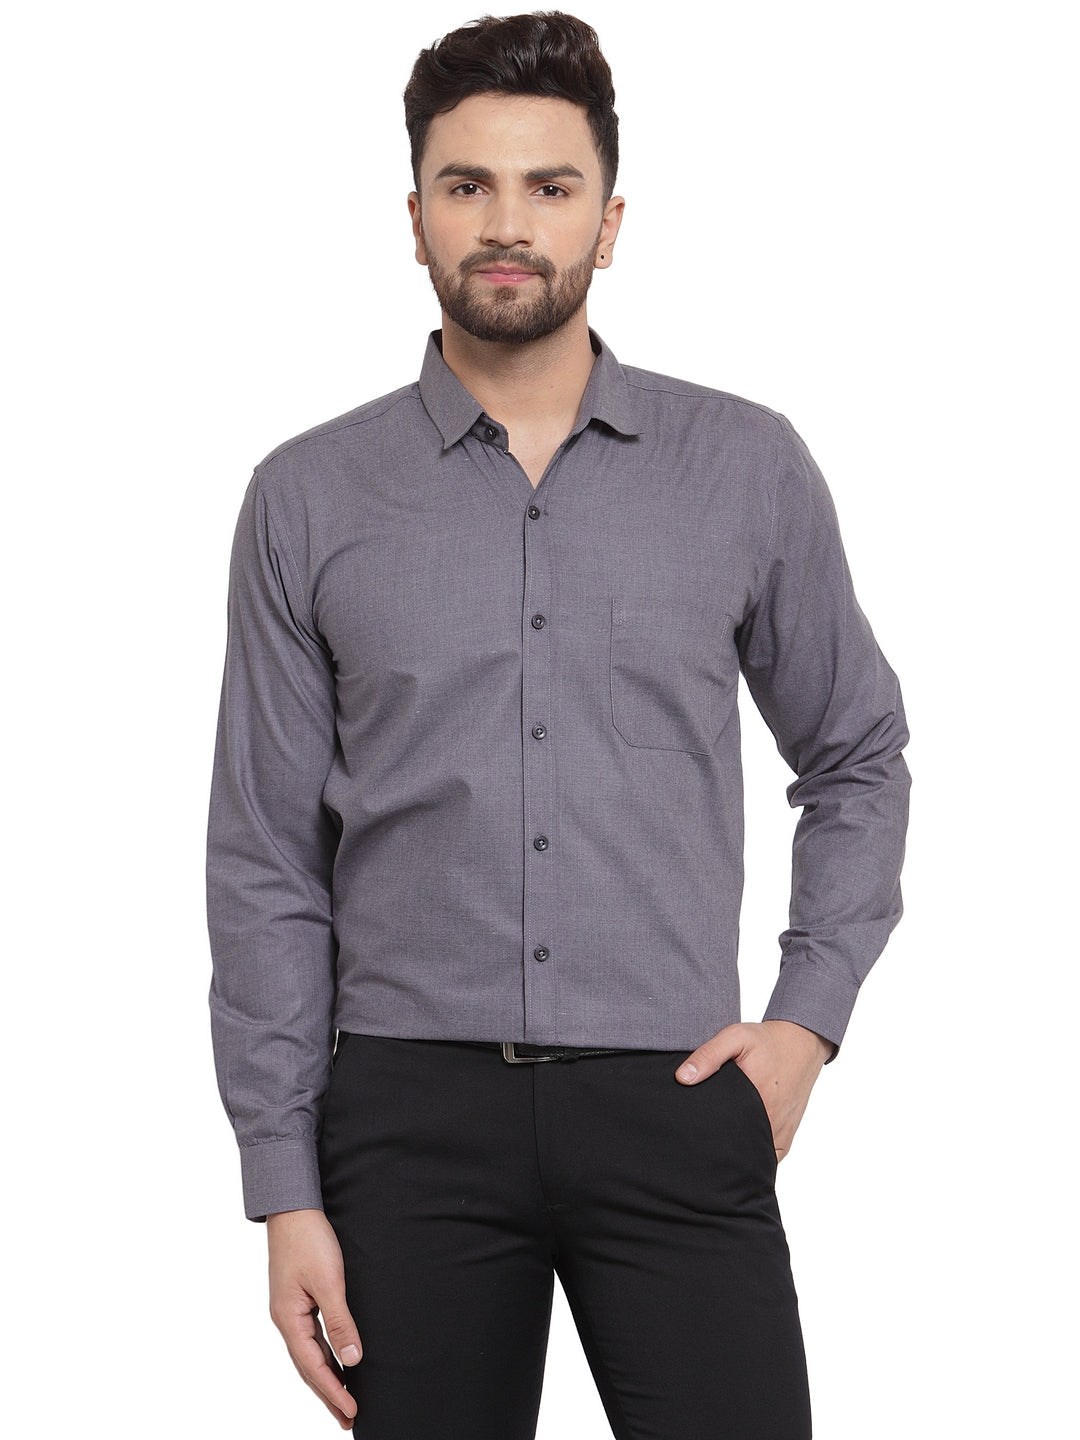 Men's Cotton Solid Charcoal Grey Formal Shirt's ( SF 361Charcoal ) - Jainish